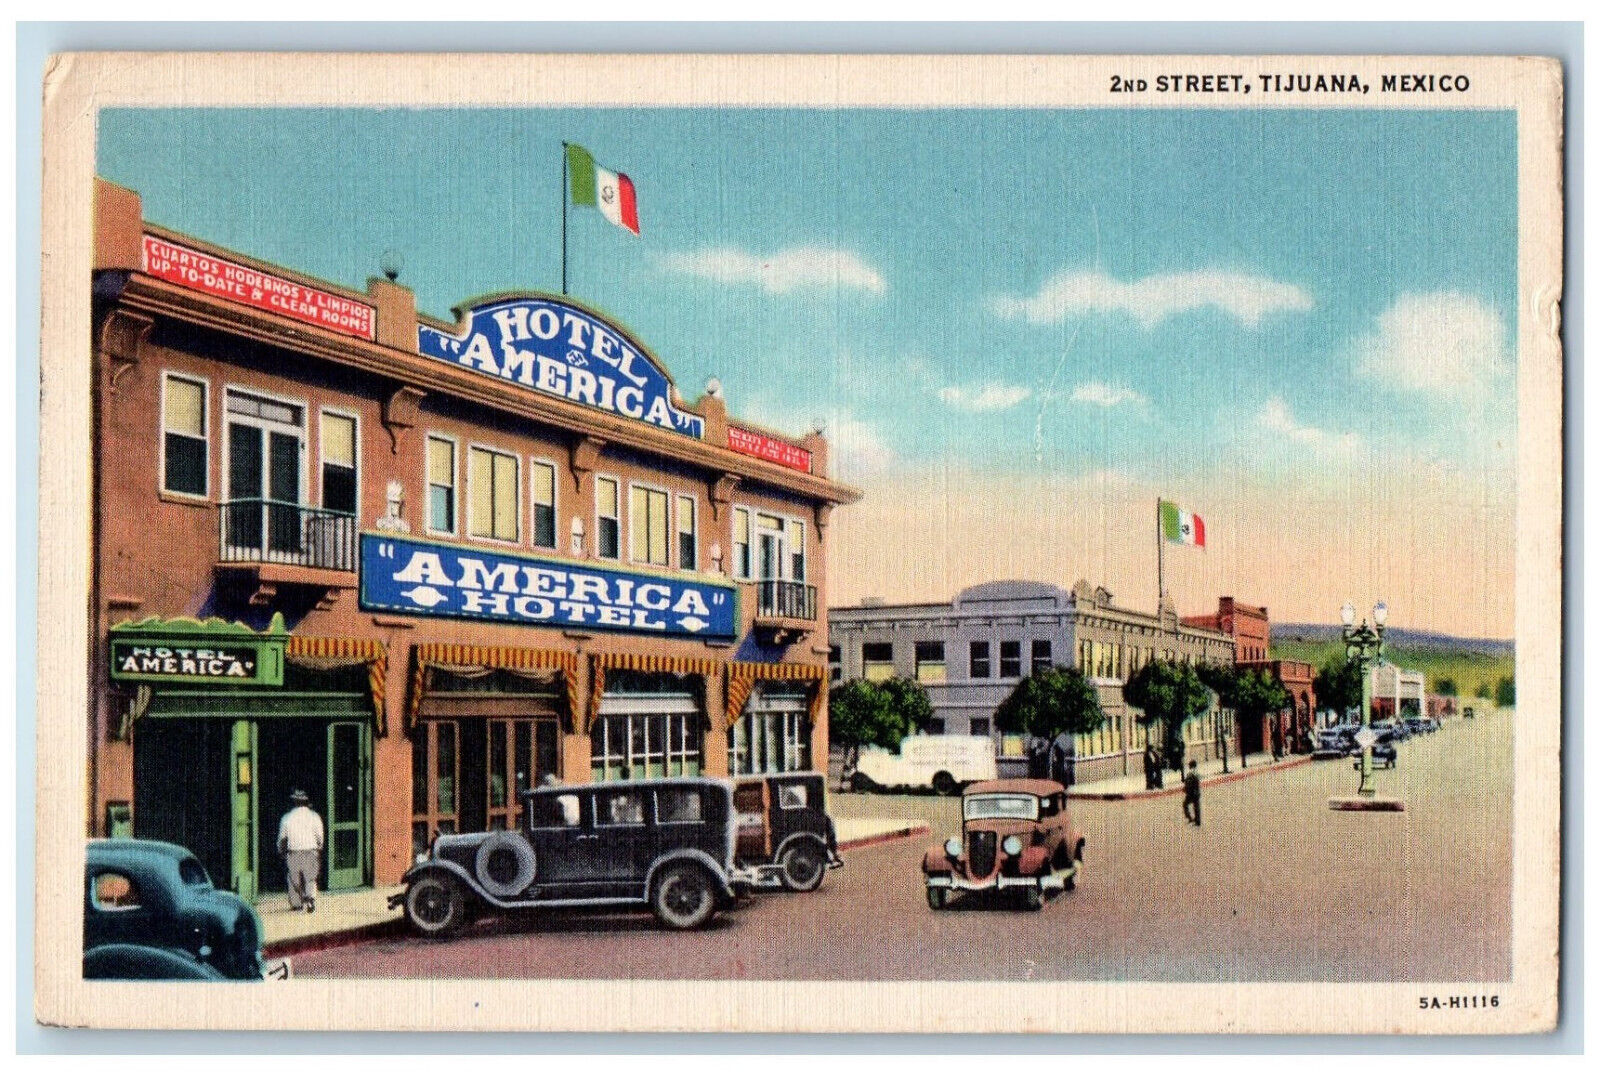 Tijuana Baja California Mexico Postcard 2nd Street America Hotel 1940